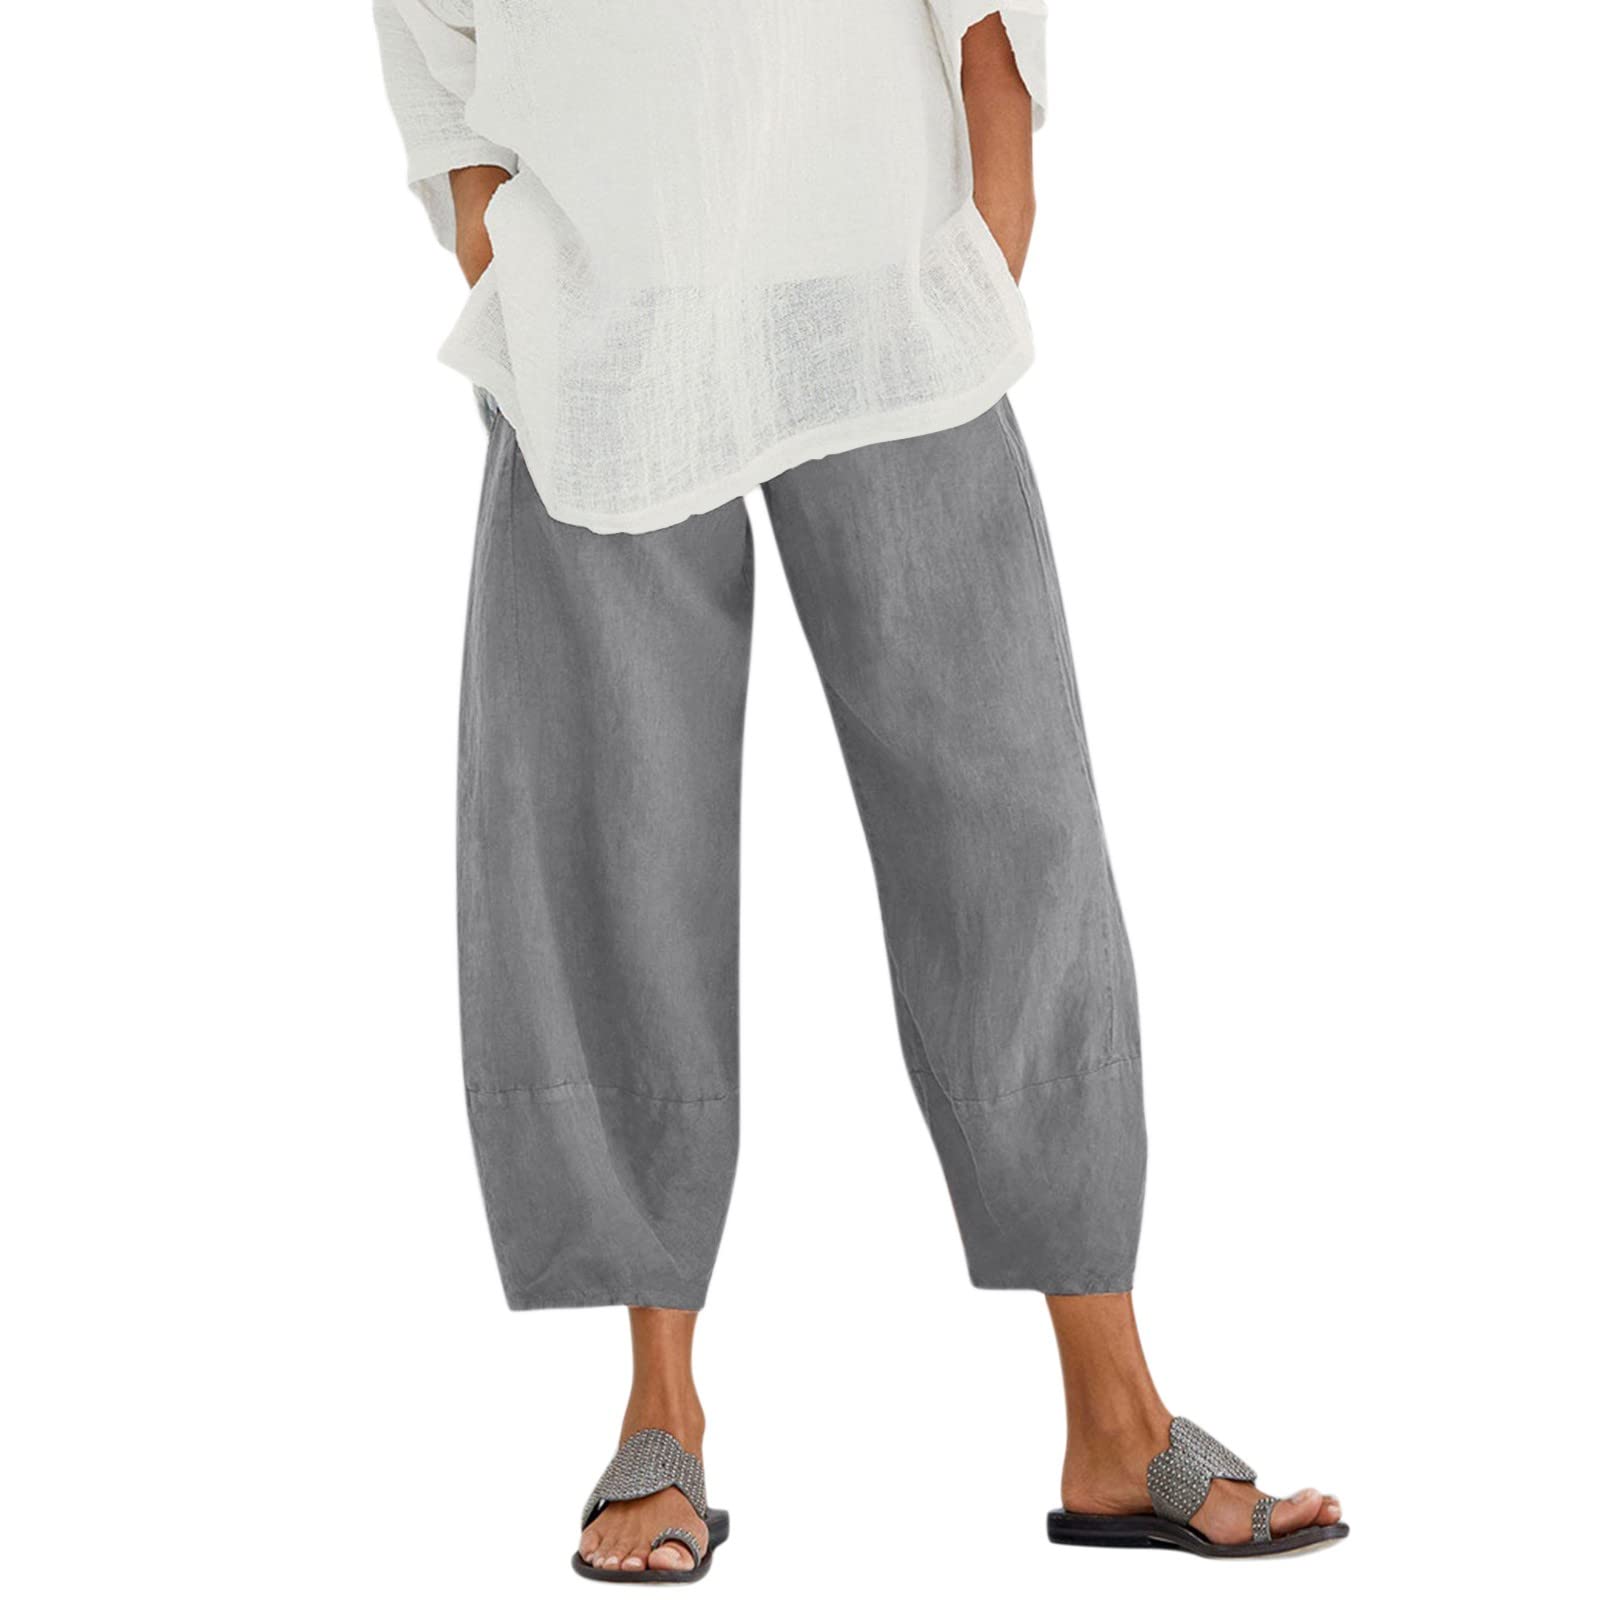  Wanzetaly Summer Cotton Linen Capri Pants for Women